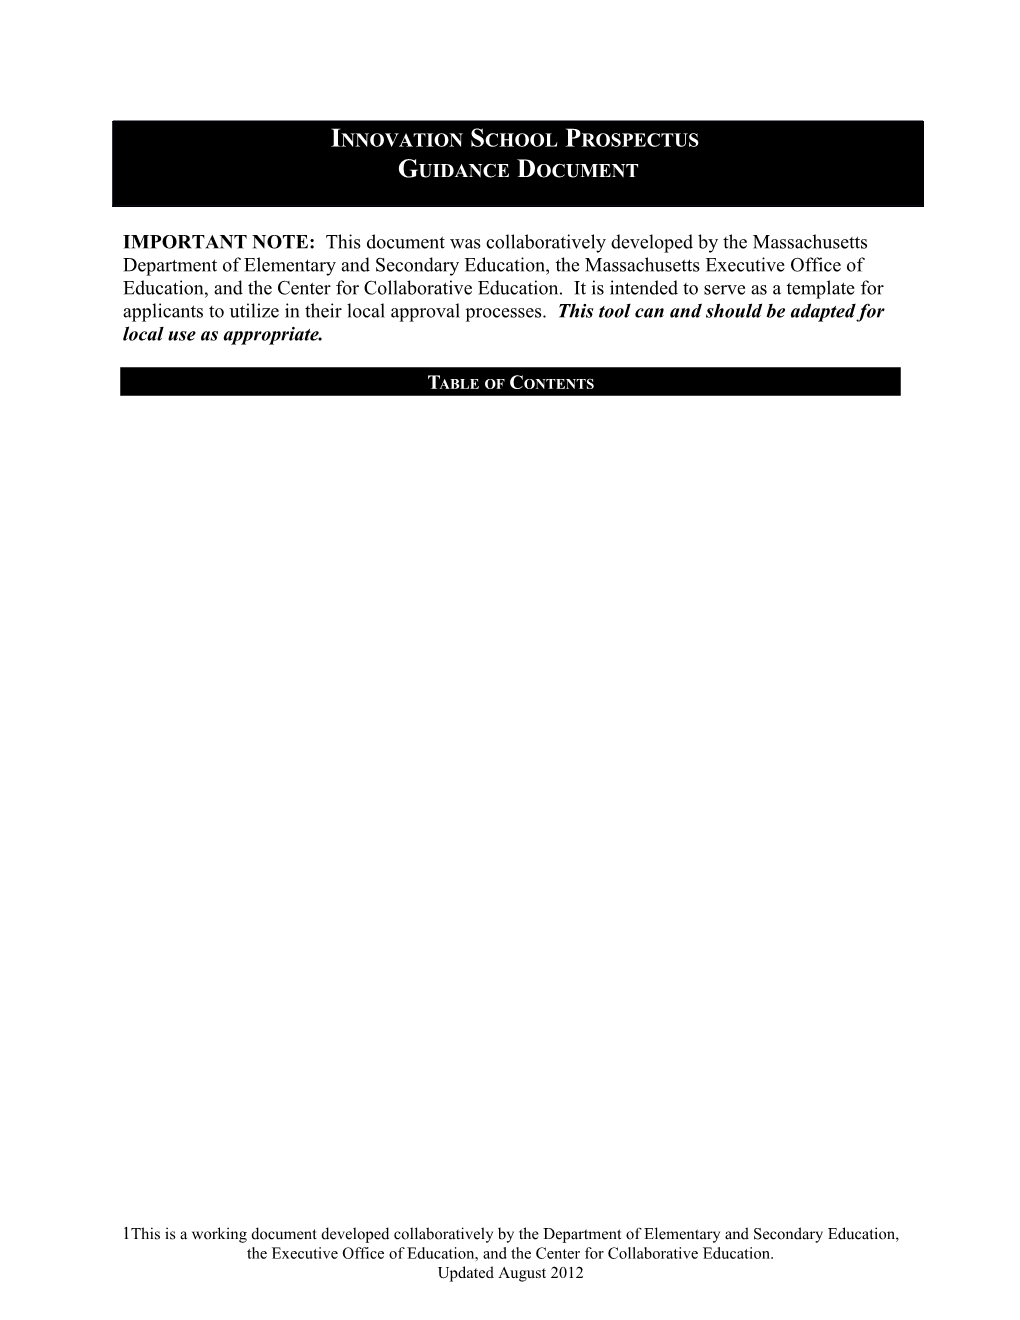 Innovation School Prospectus: Guidance Document